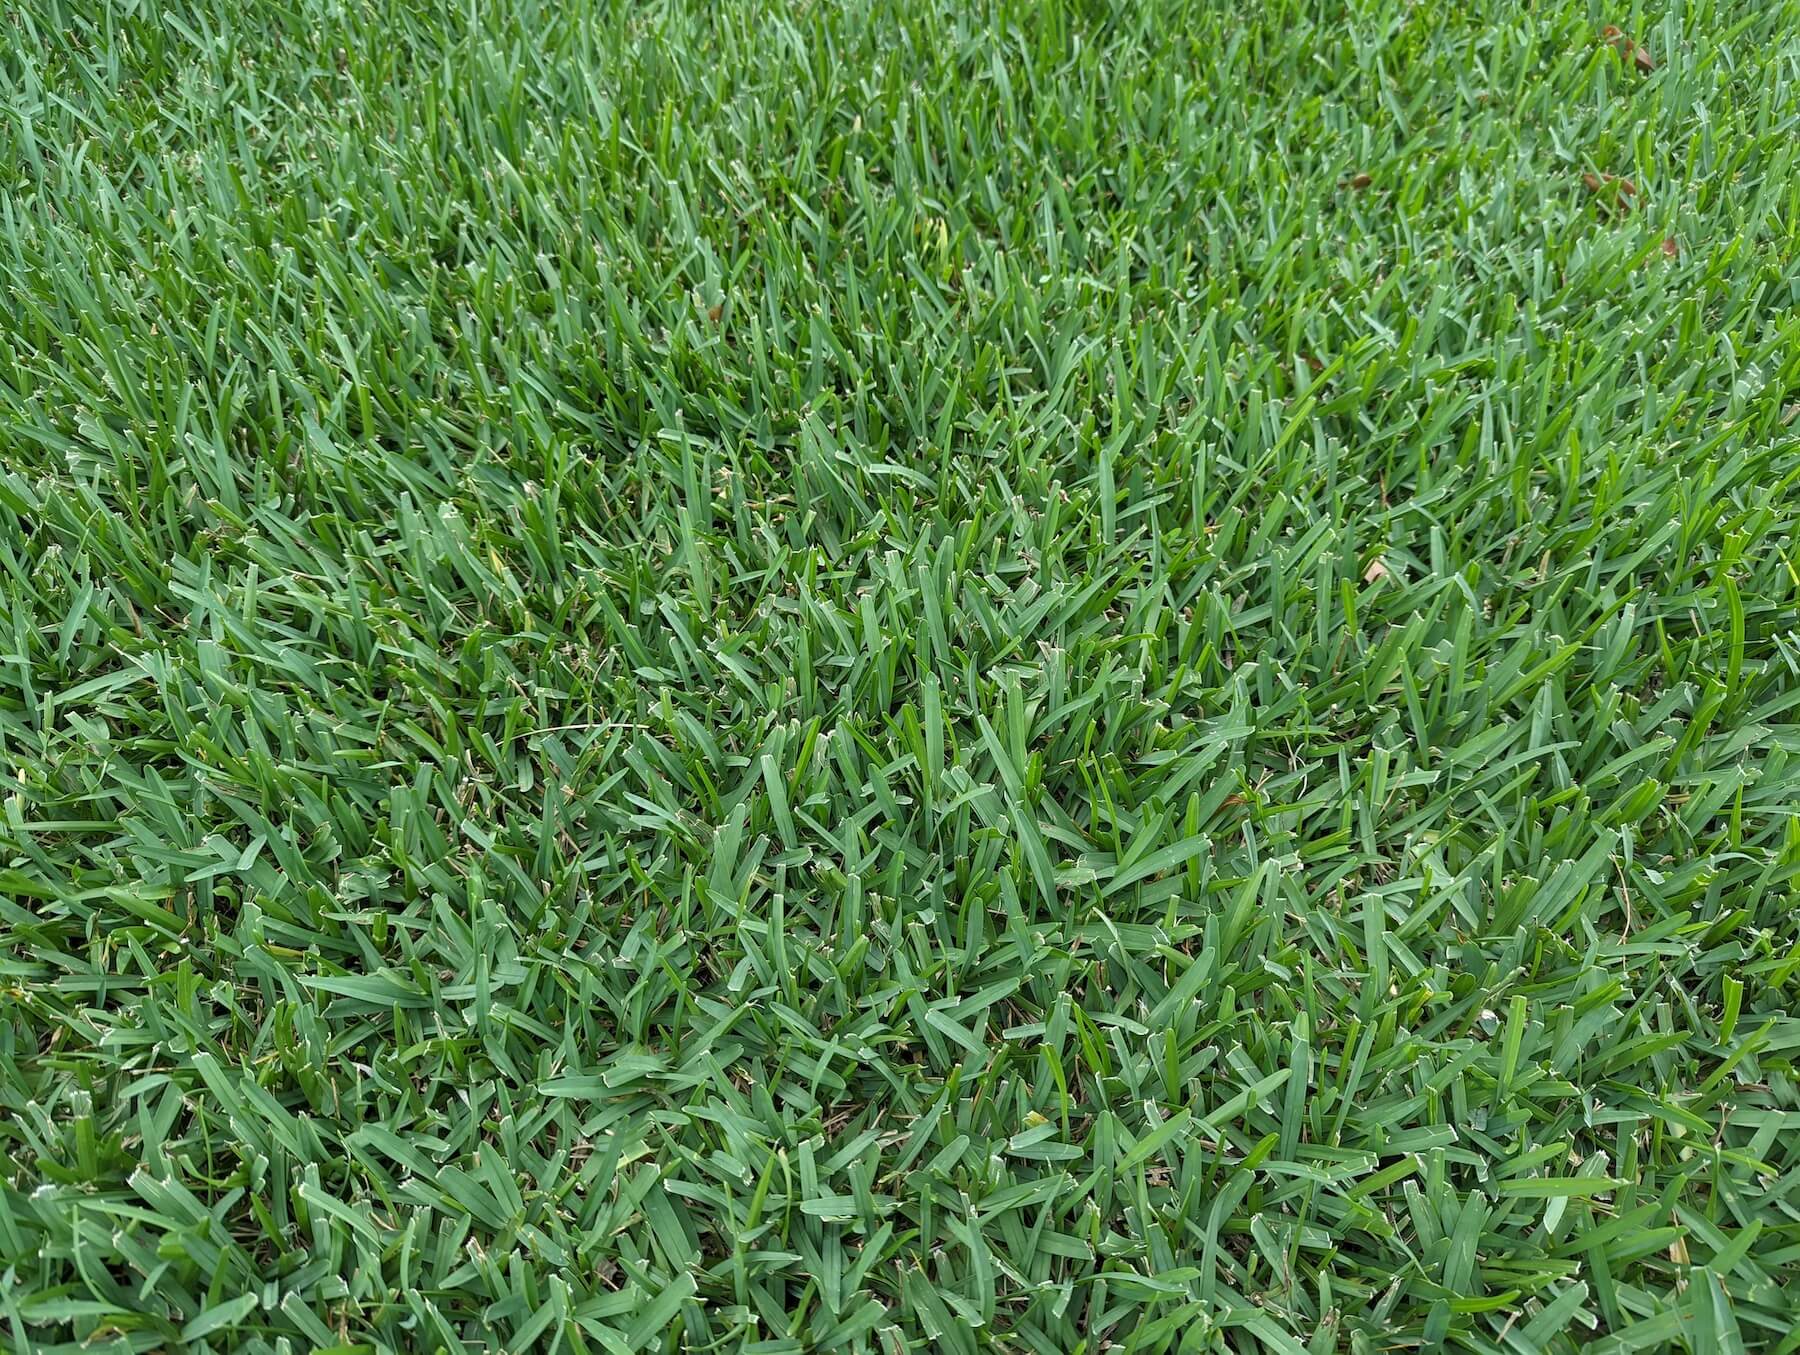 st. augustine sod closeup lawn